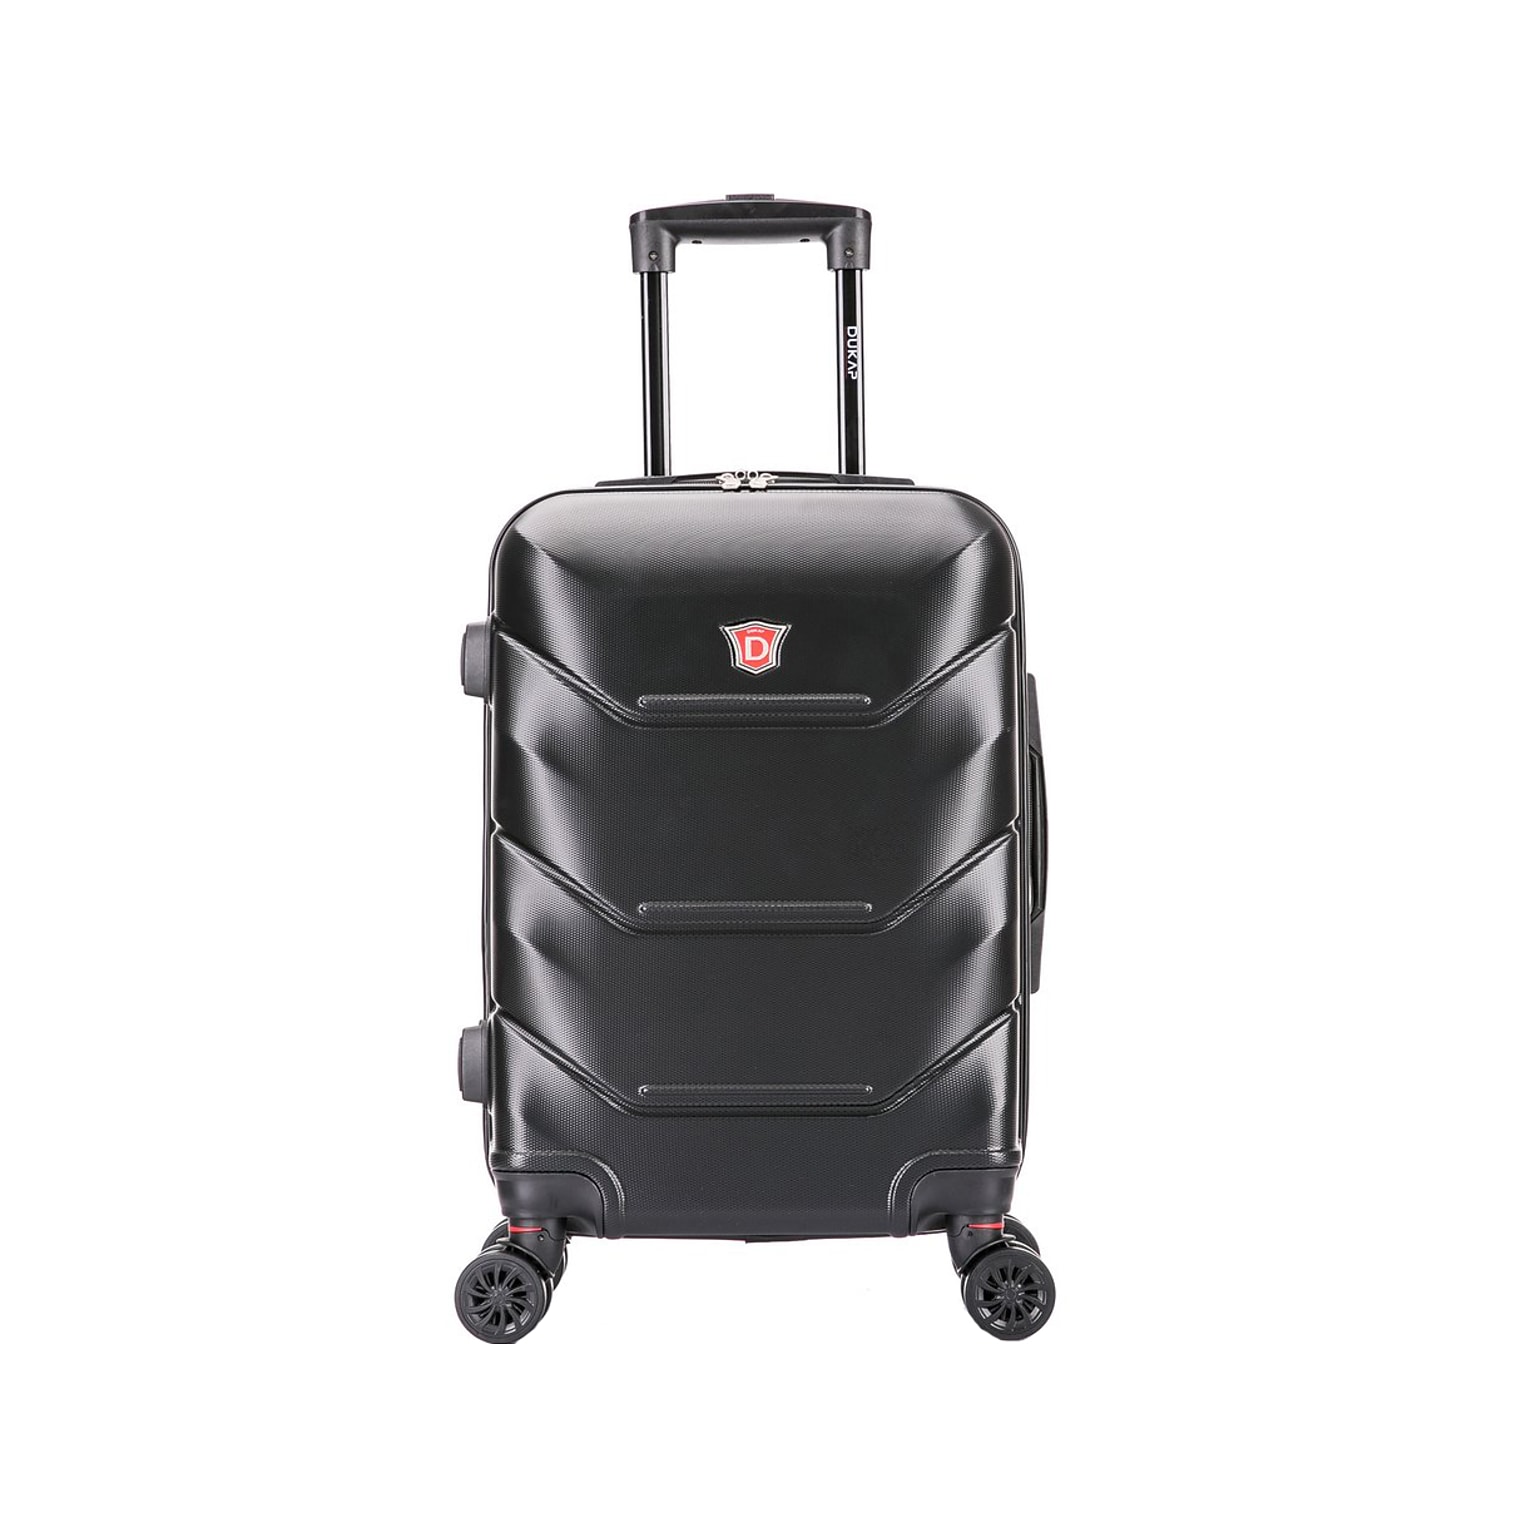 DUKAP Zonix 22.05 Hardside Carry-On Suitcase, 4-Wheeled Spinner, Black (DKZON00S-BLK)